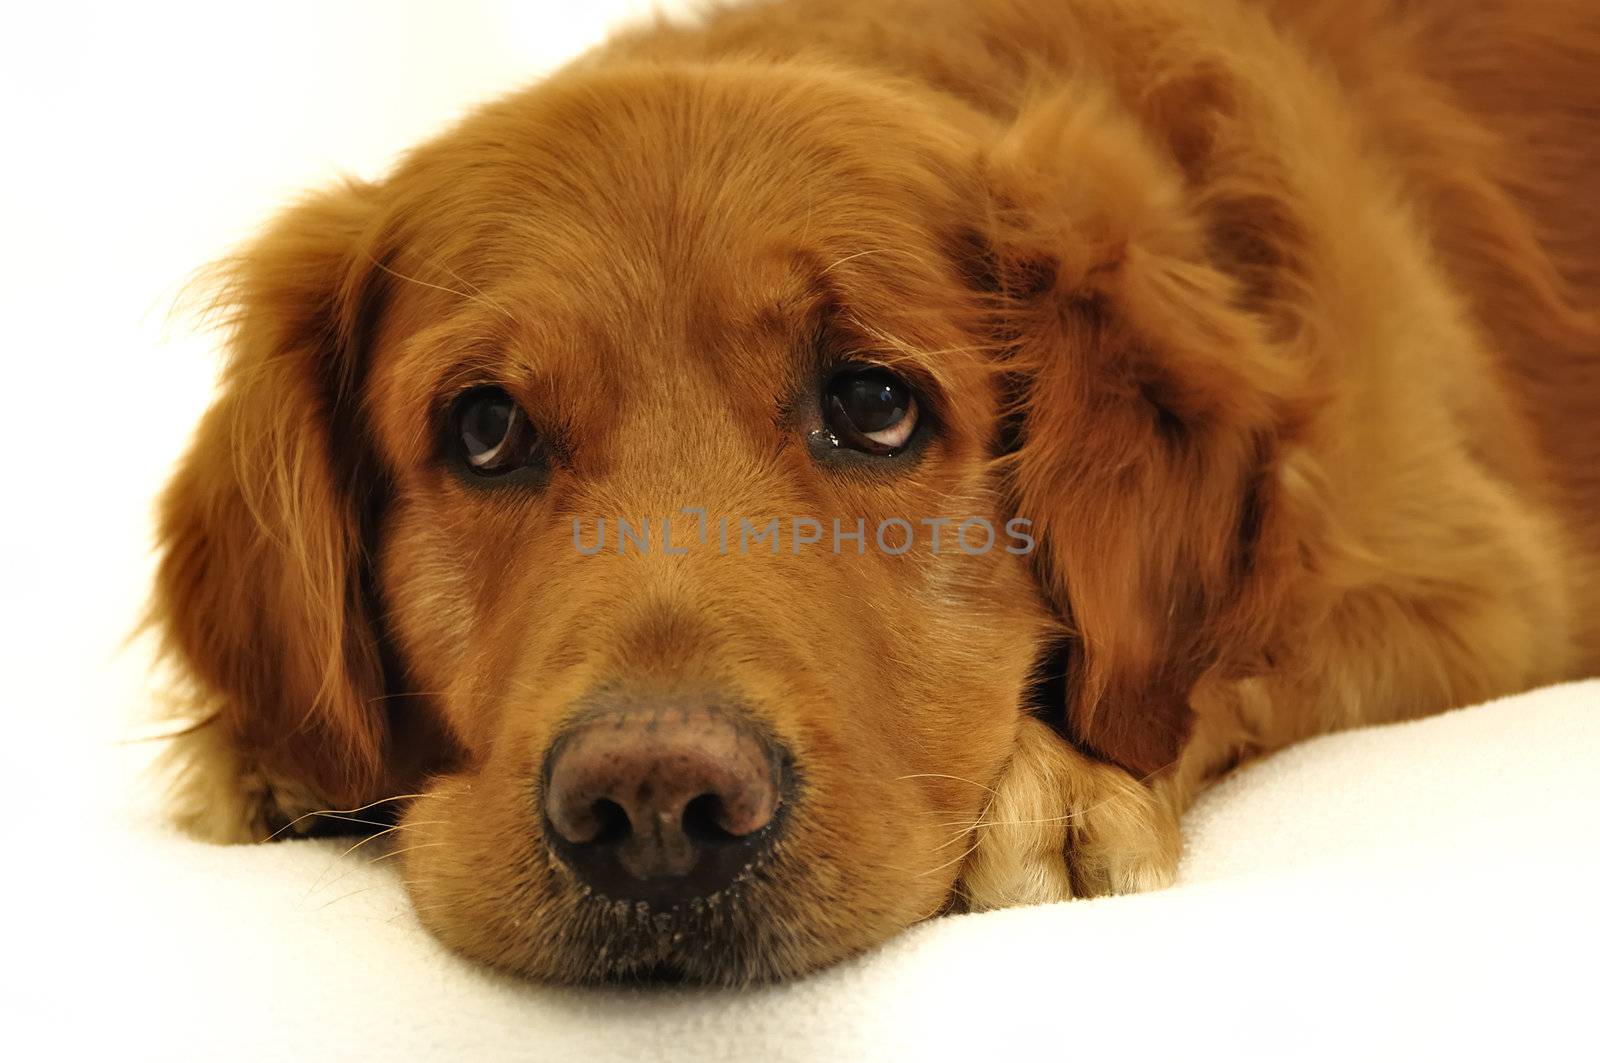 Golden retriever dog very expressive face close up. by jmffotos